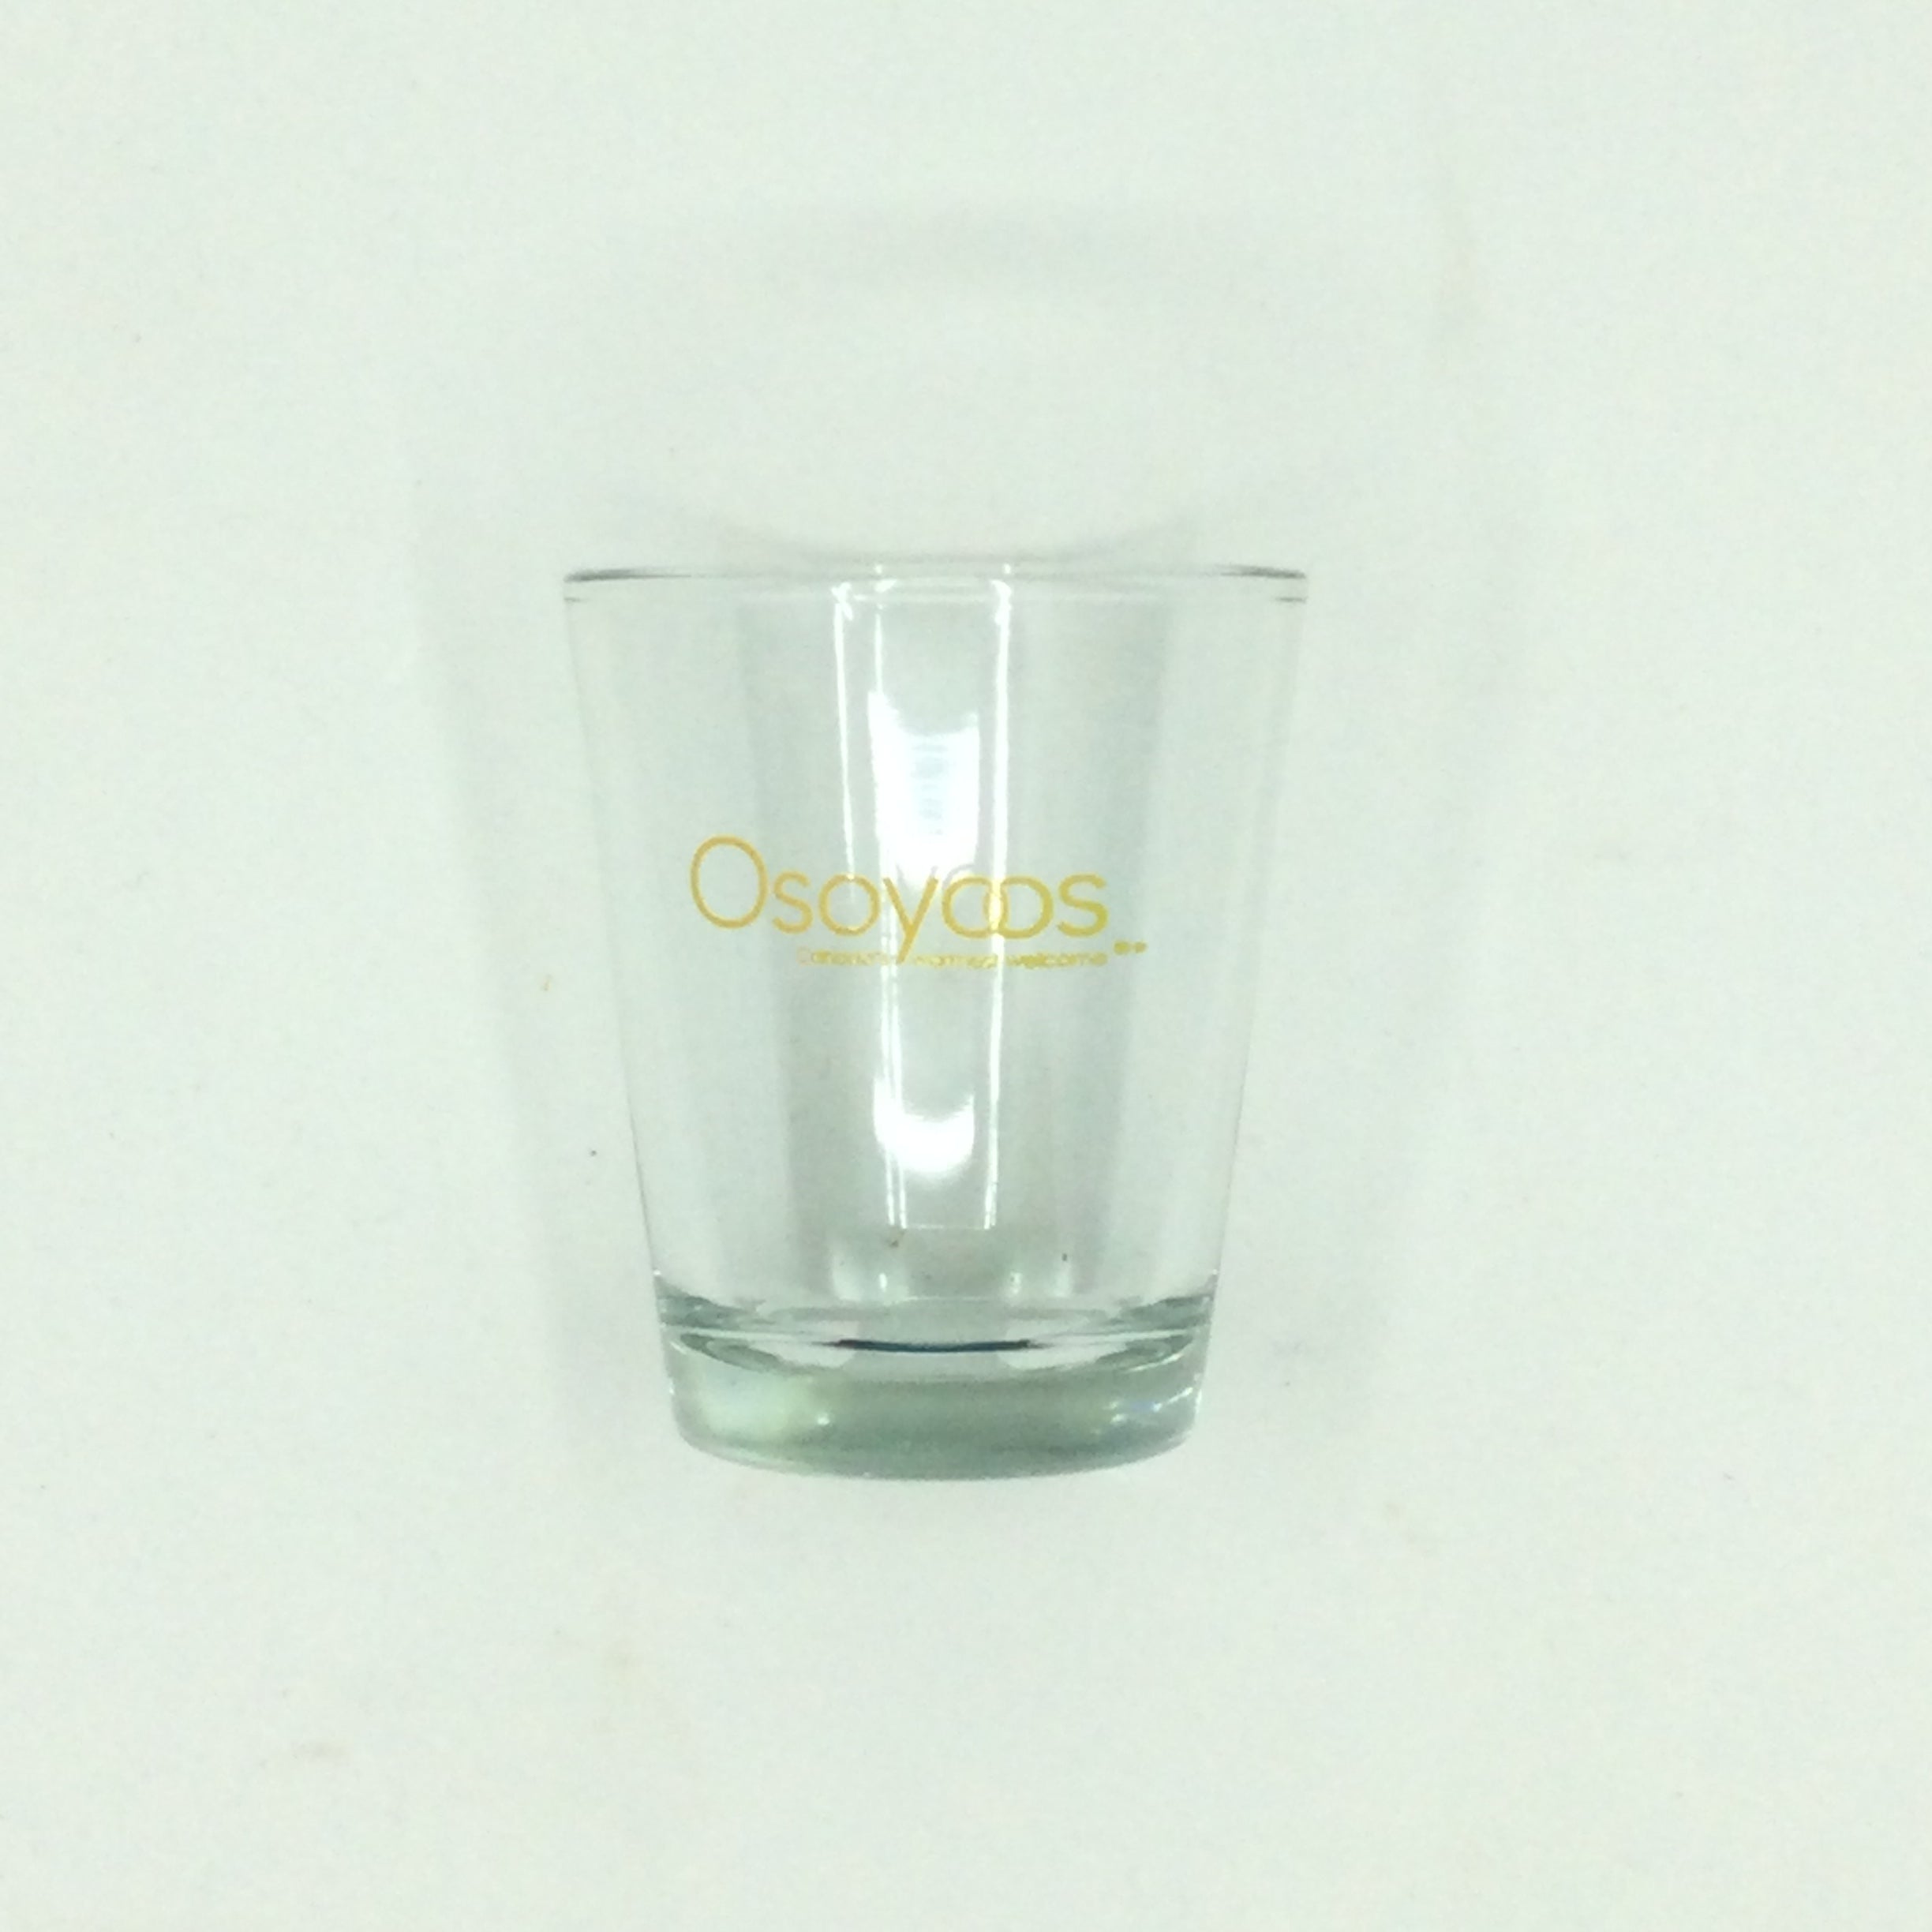 Osoyoos Shot Glass